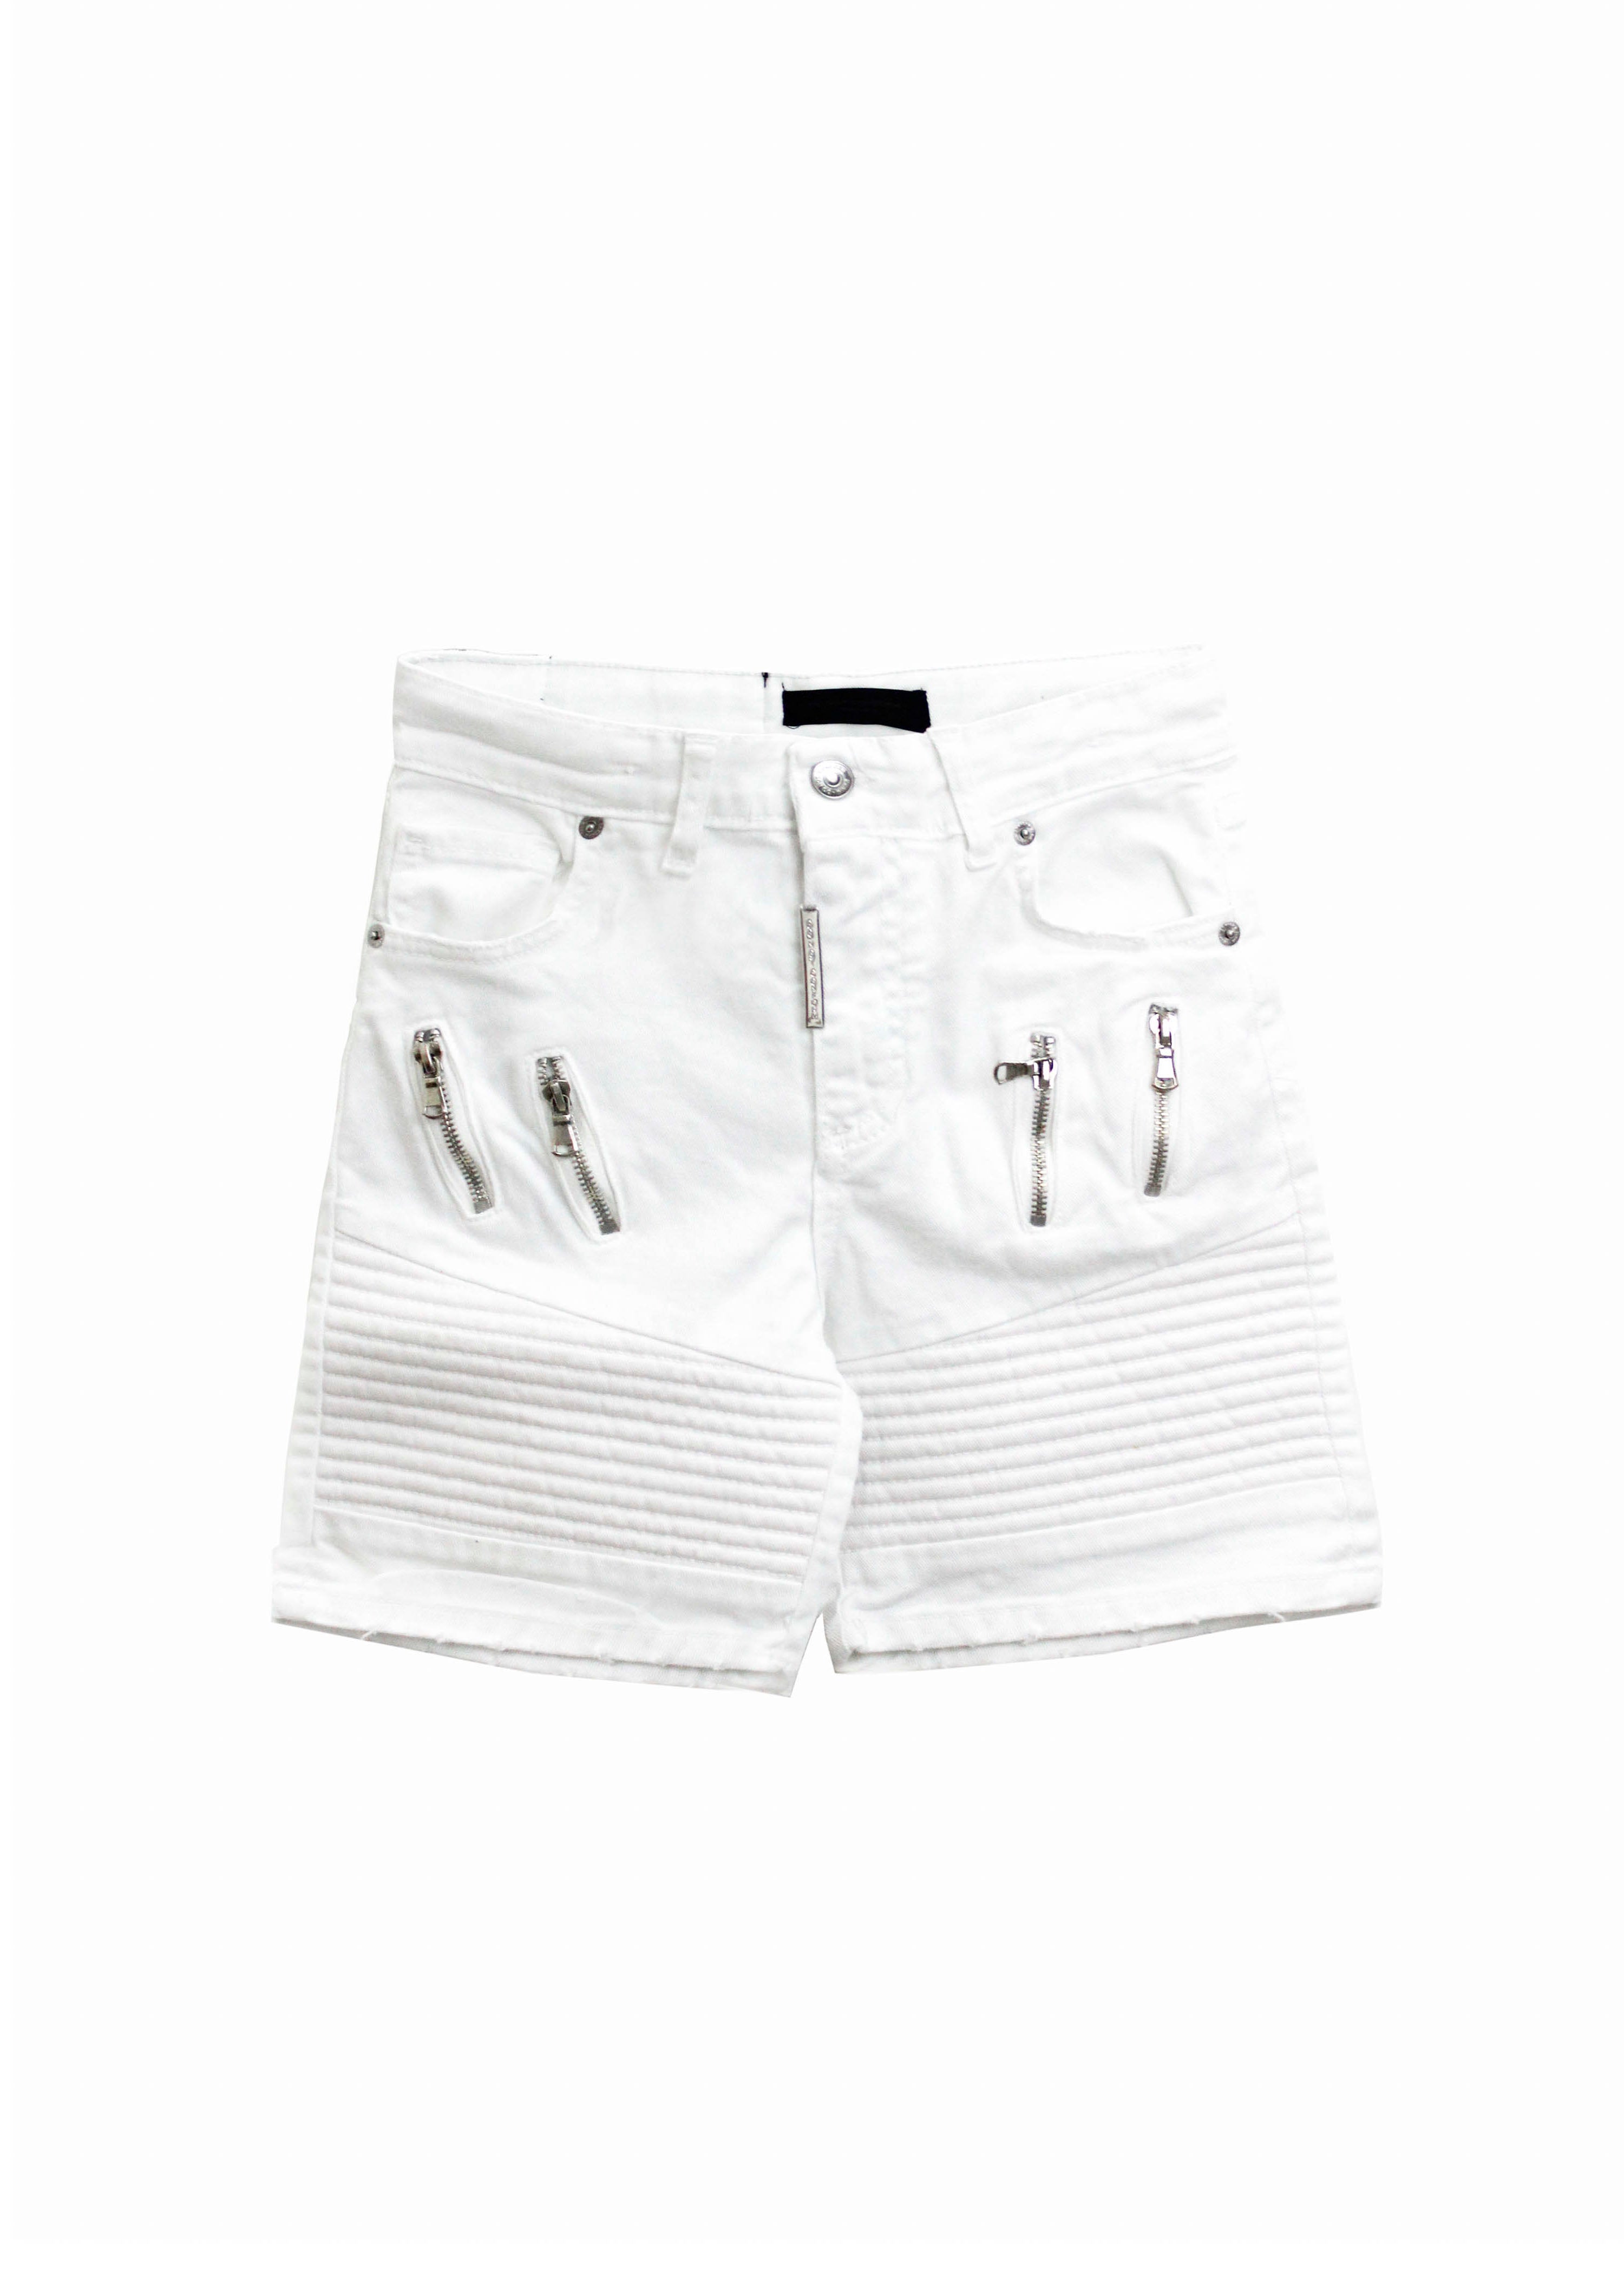 Do Not Conform Short Jeans Bianco per Bambini